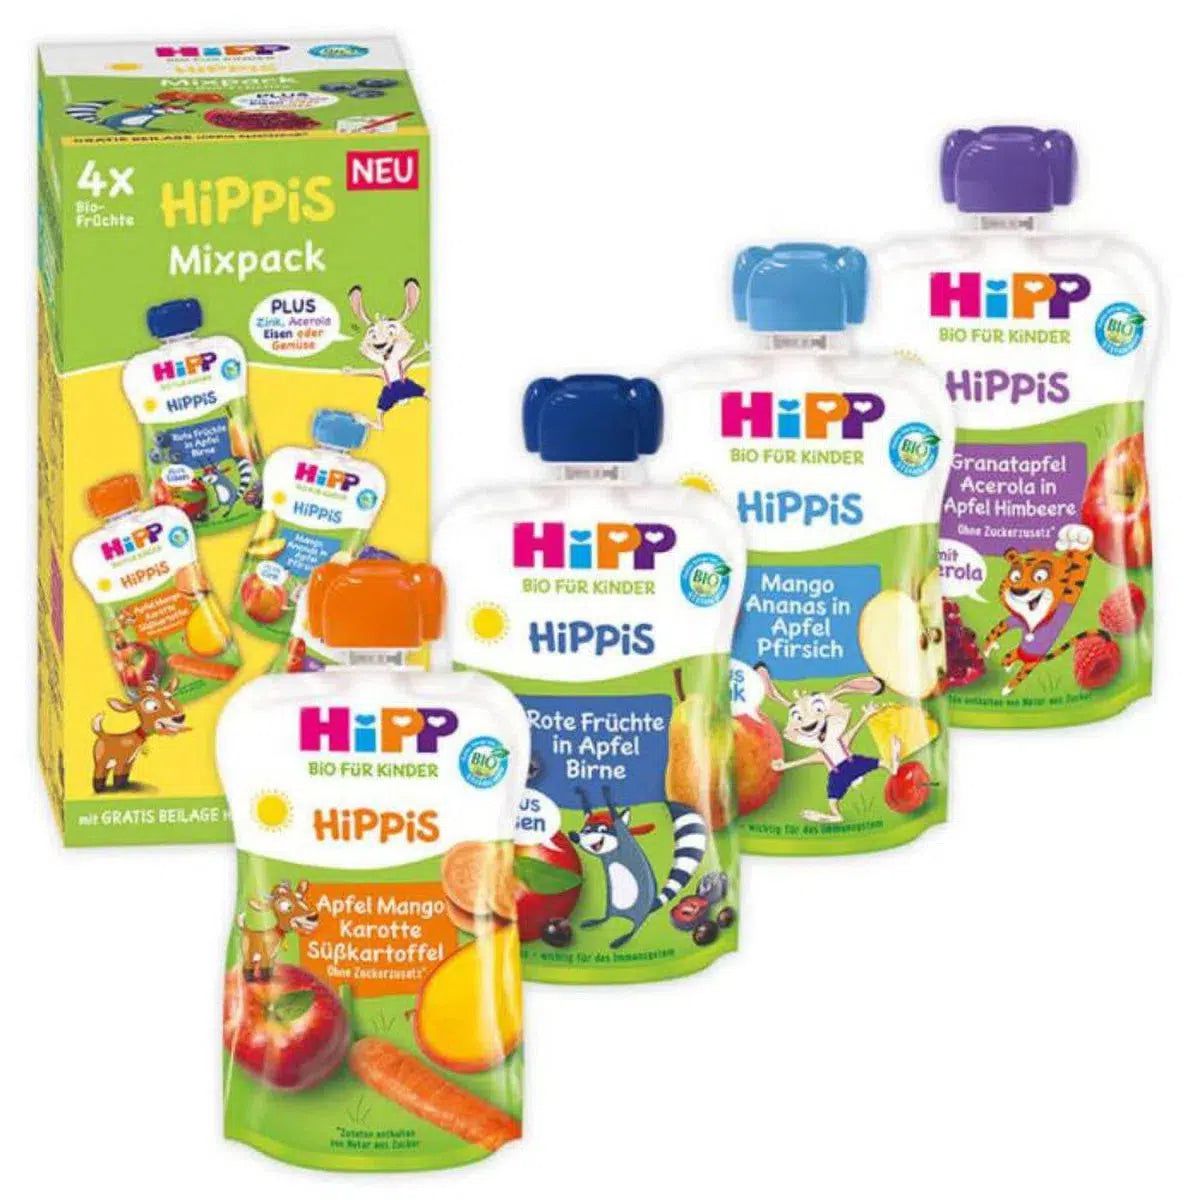 HiPP Fruit Pouches Hippis Mixpack | Organic Baby Food